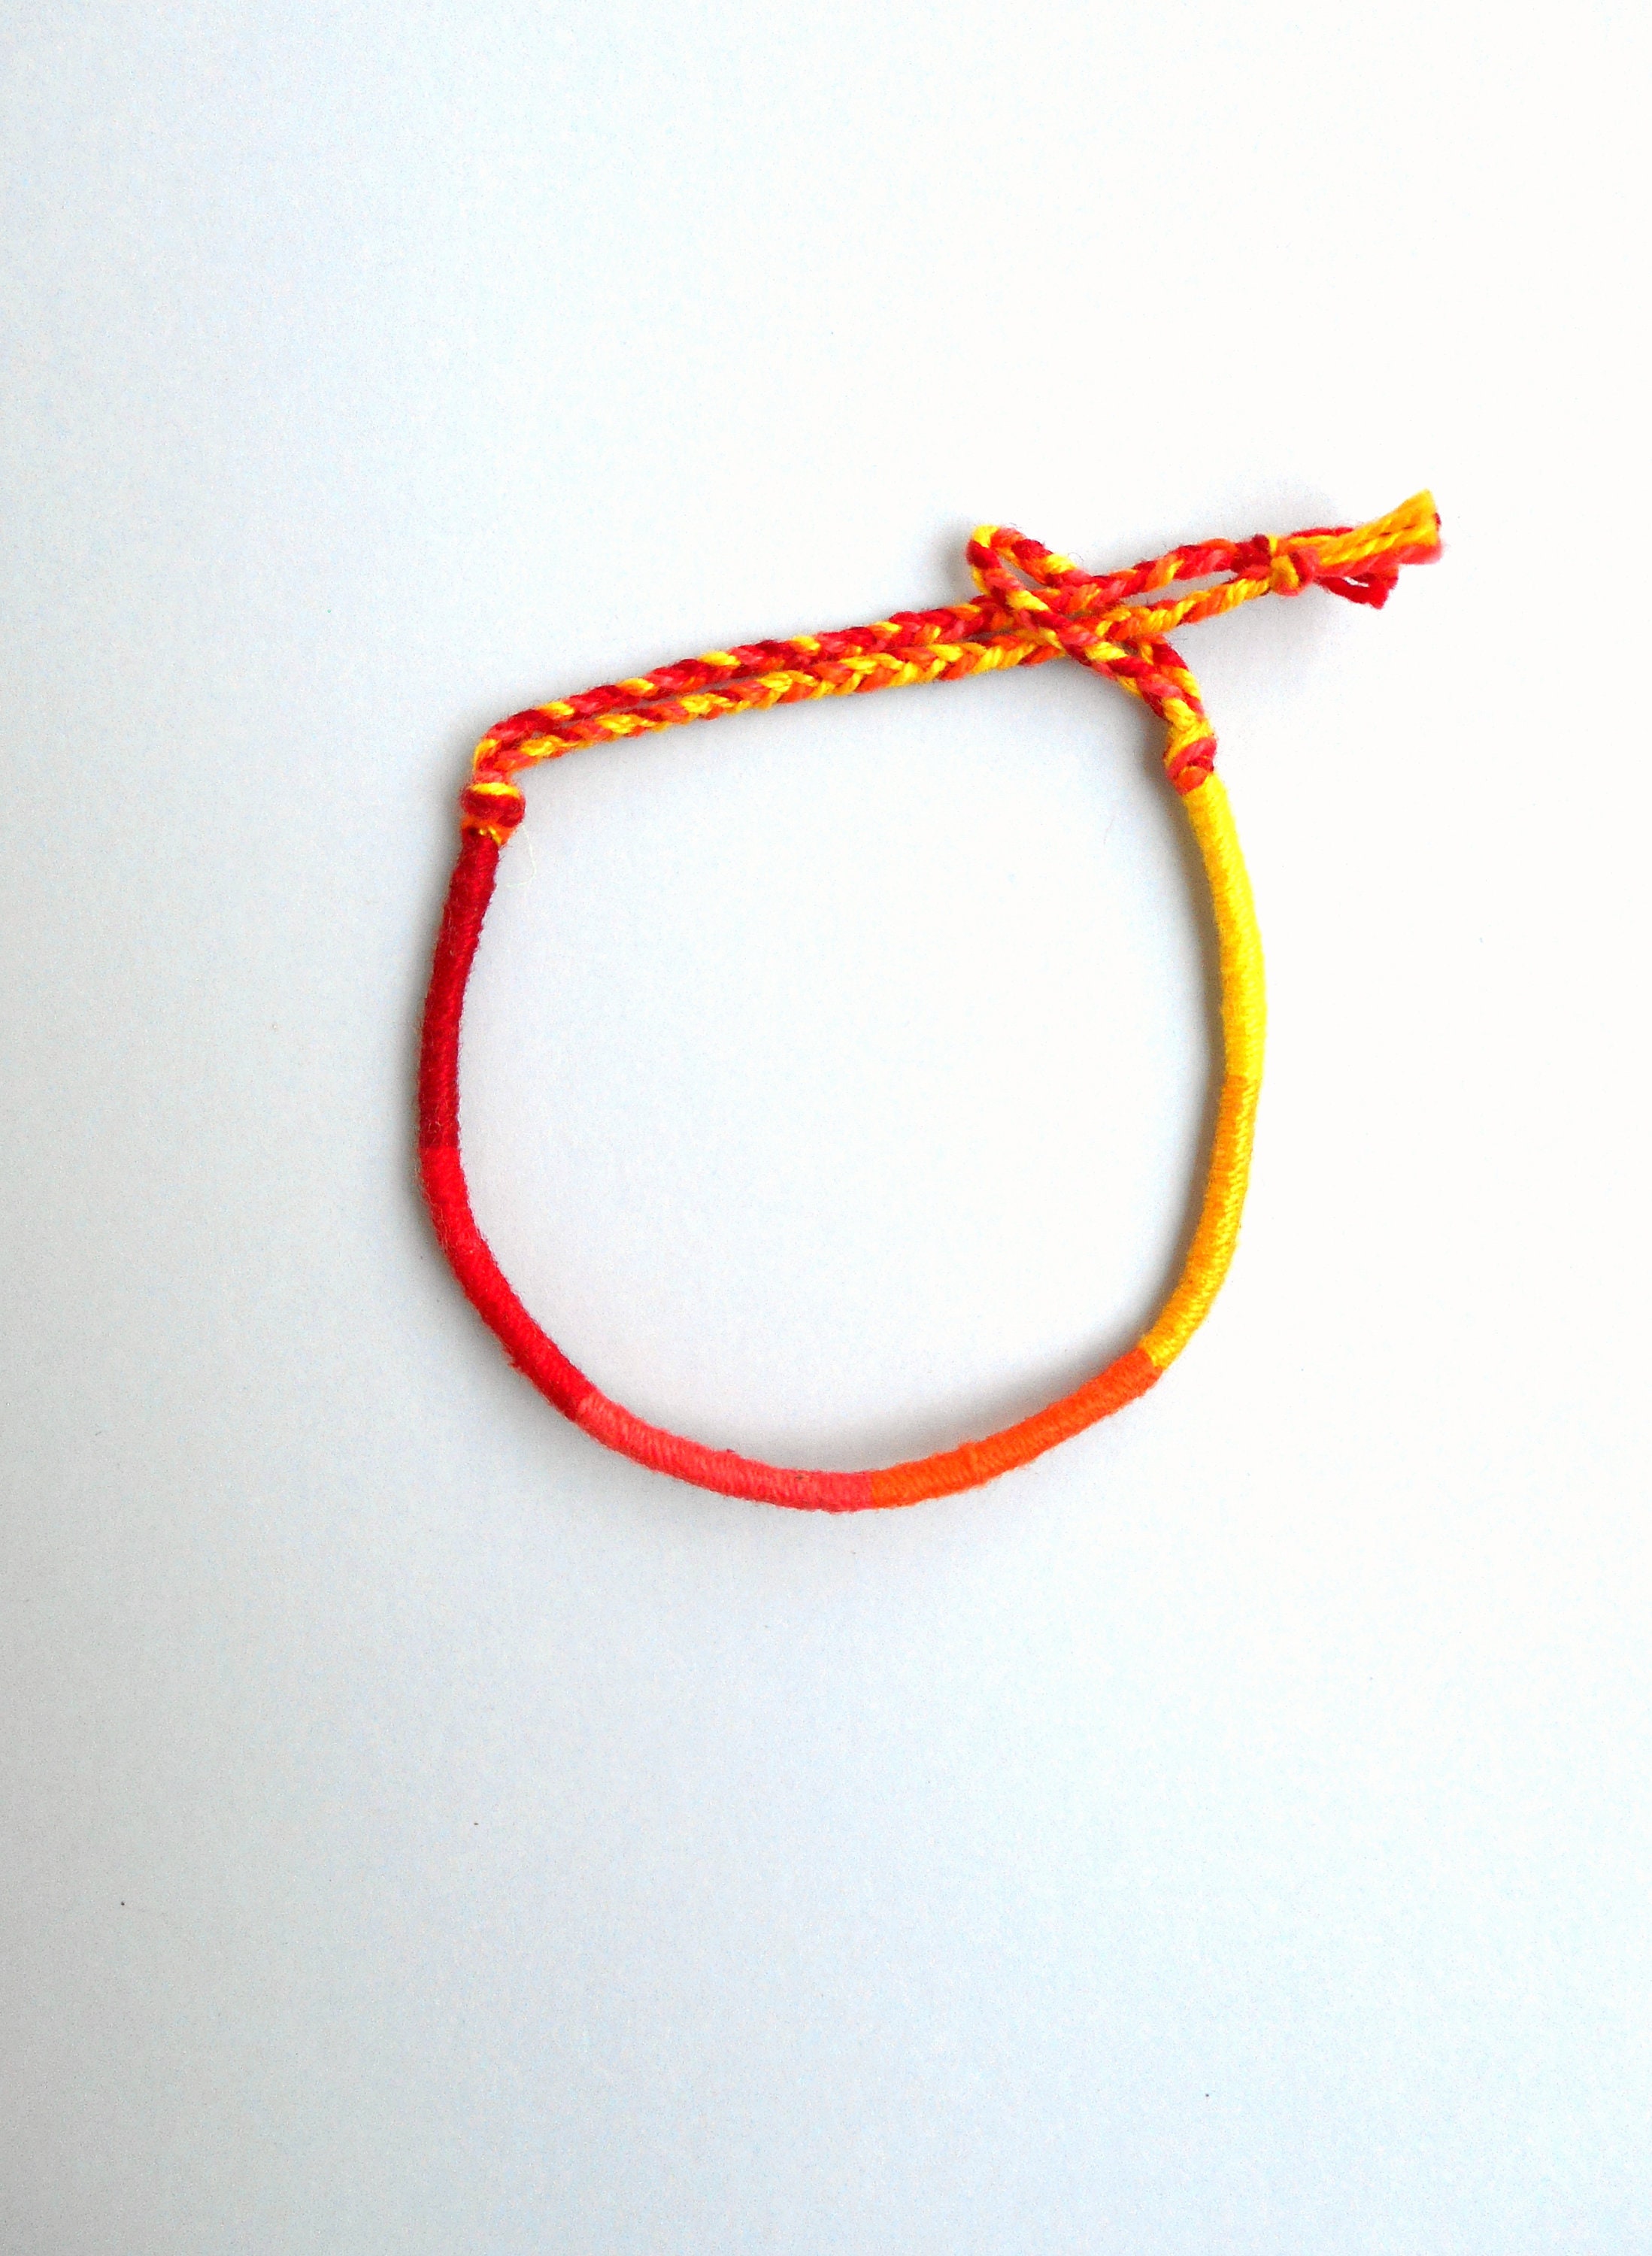 Buy Thin Rope Friendship Bracelet, Cotton Thread Wrapped Bracelet